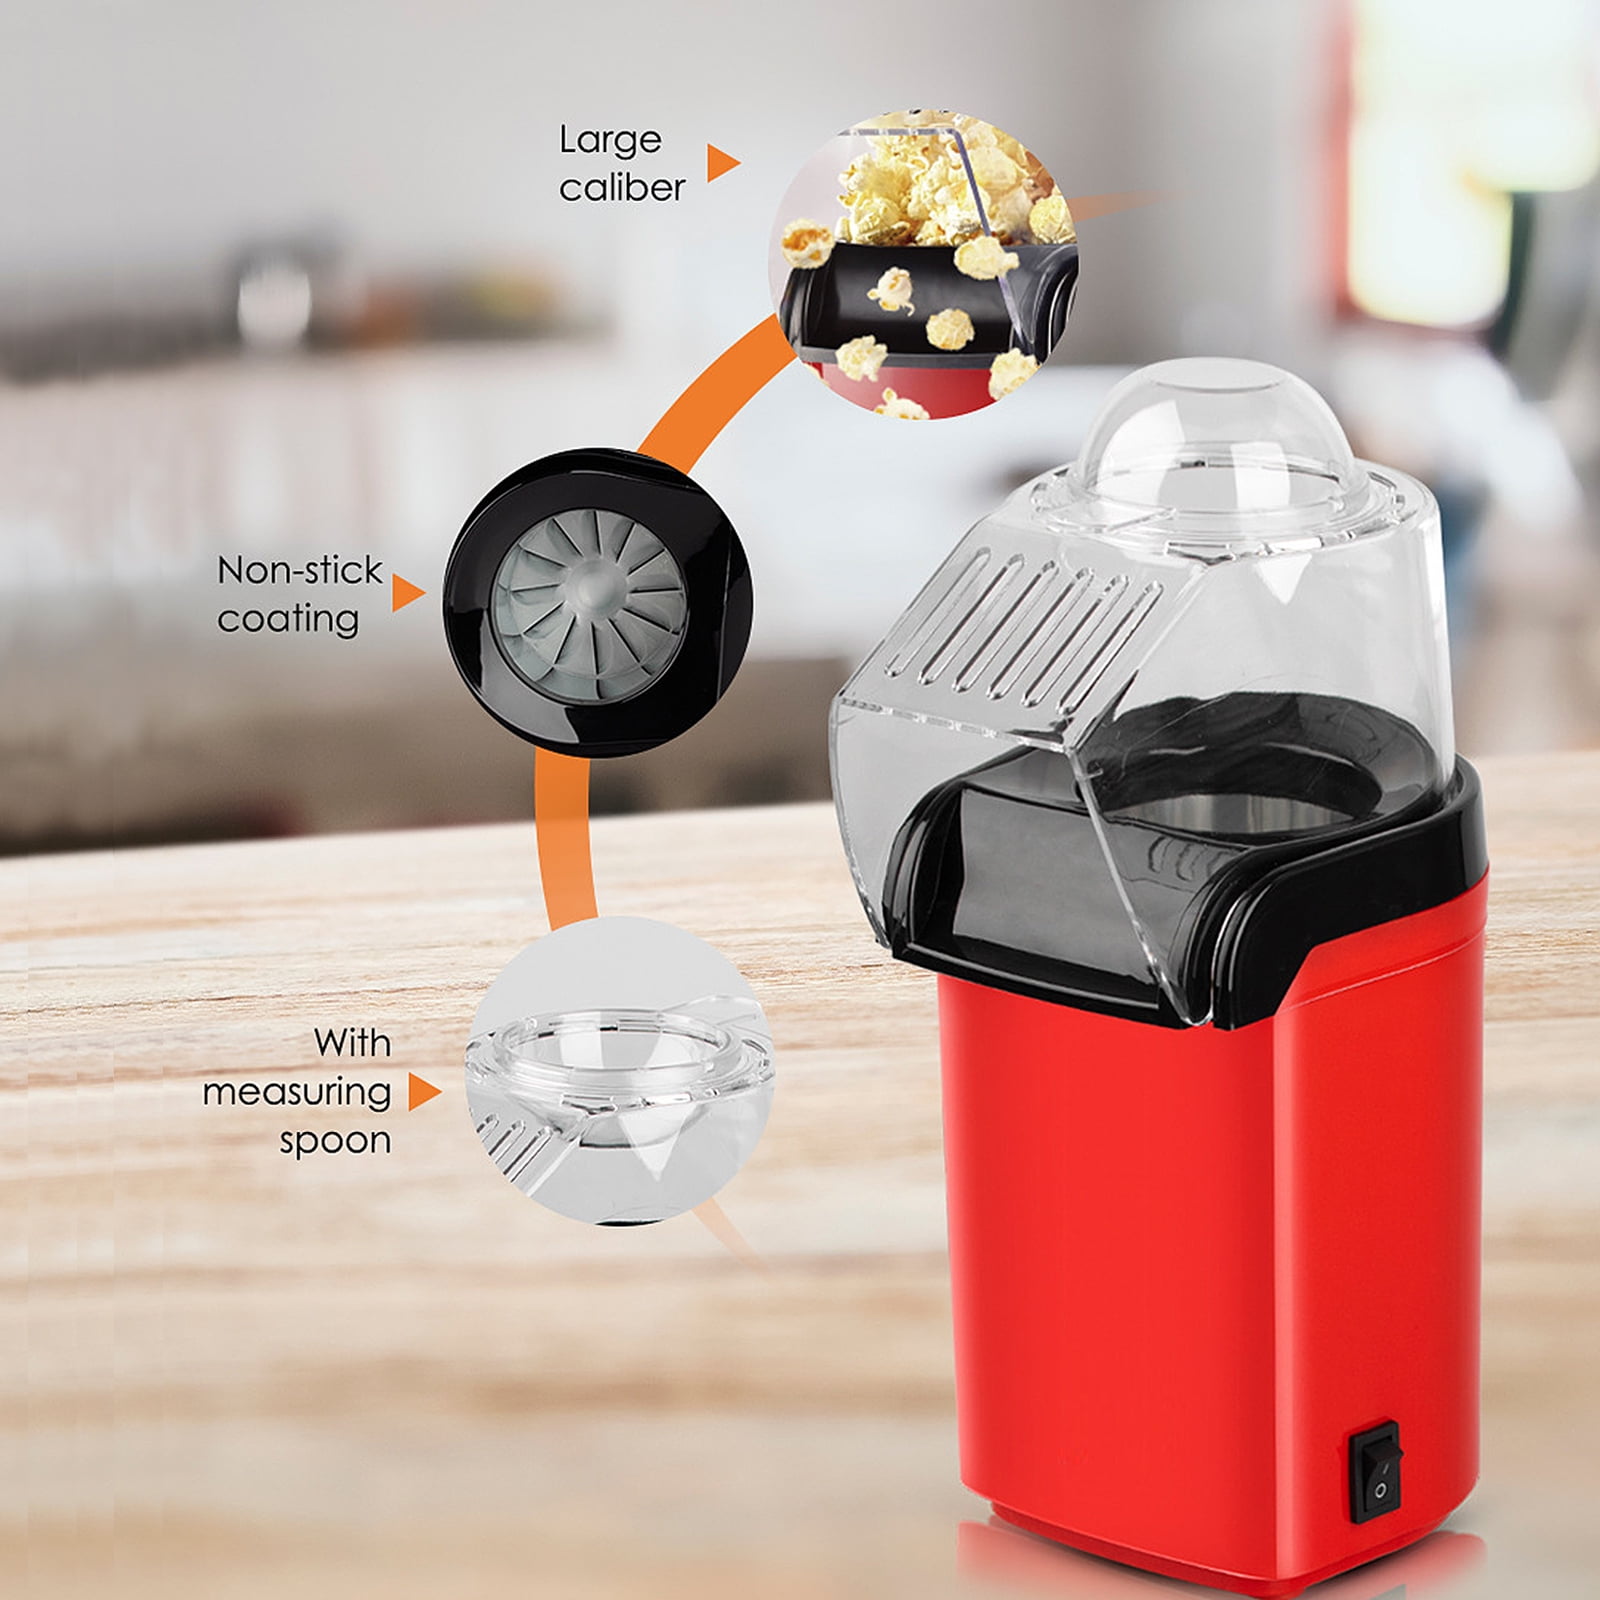 1200W Mini Home Popcorn Machine Plug-In Hot-Air Oil-Free Popcorn Machine  Popcorn Makers for Home Kitchen Party Travel US EU Plug